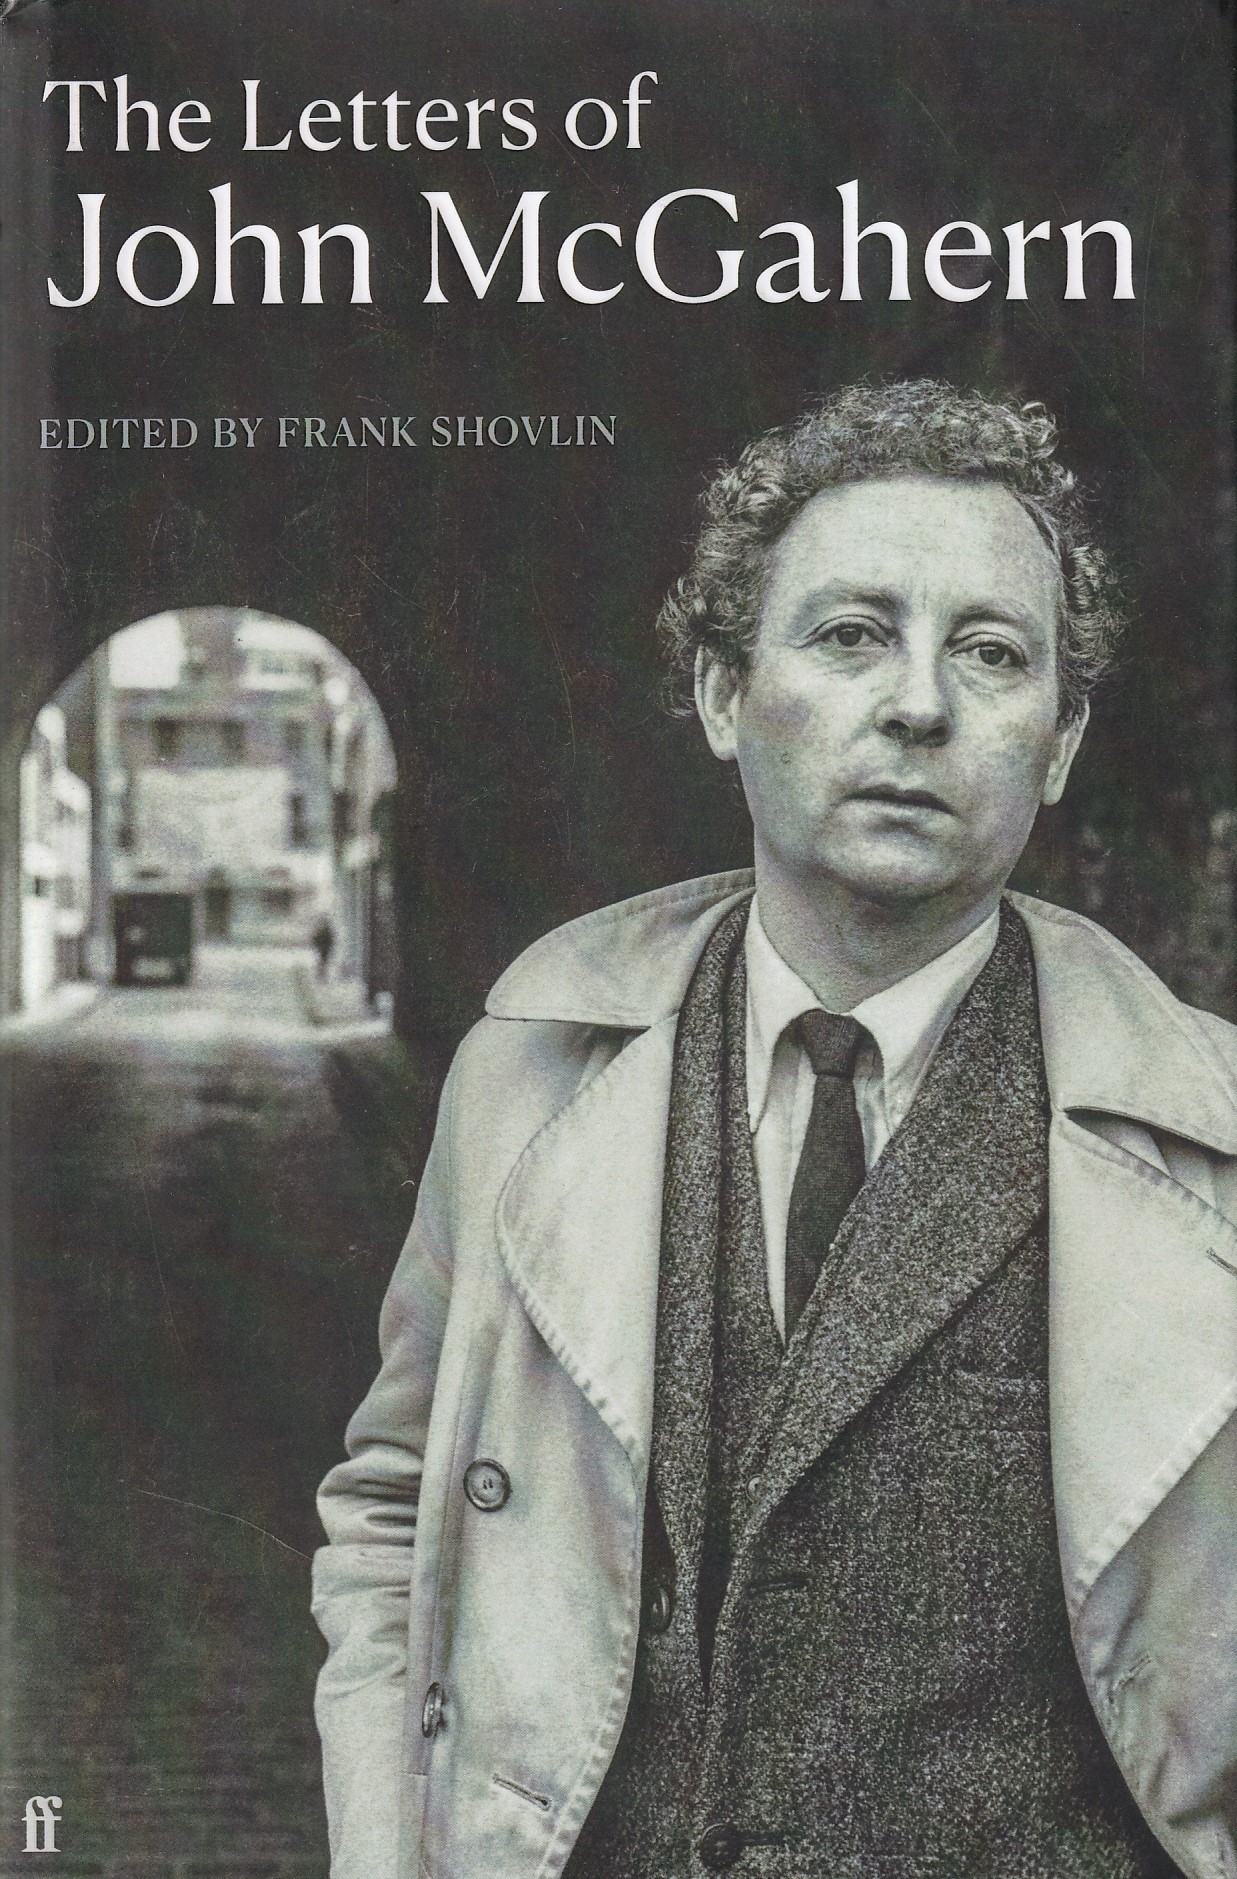 The Letters of John McGahern | John McGahern (ed. Frank Shovlin) | Charlie Byrne's